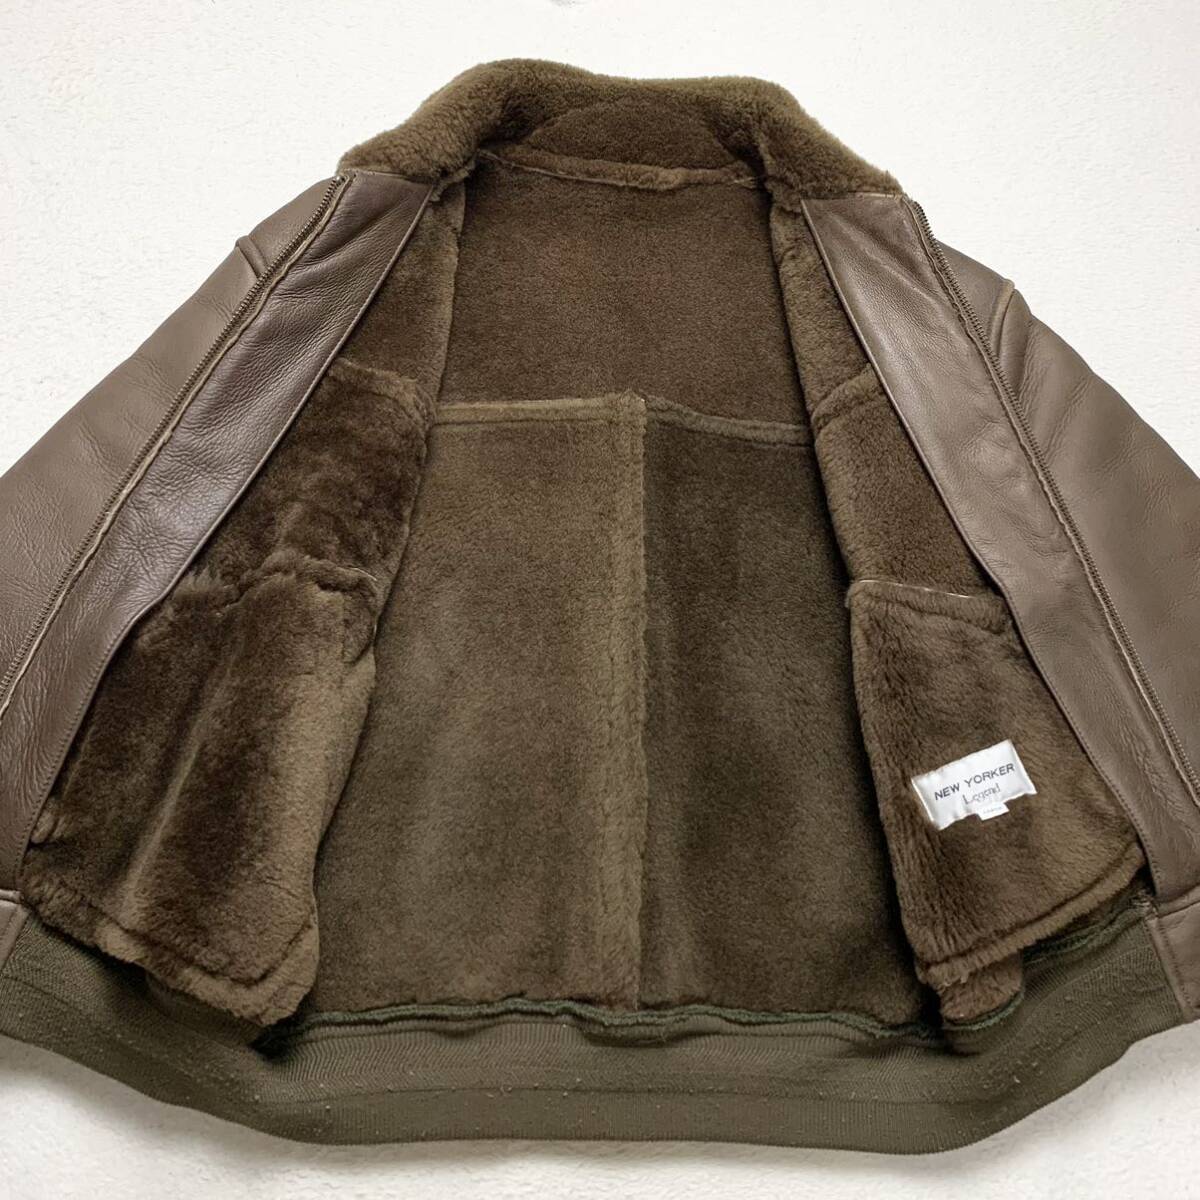  rare L new yo- car [ finest quality. ram leather ]NEWYORKER rider's jacket mouton boa leather jacket blouson sheepskin sheep leather Brown 